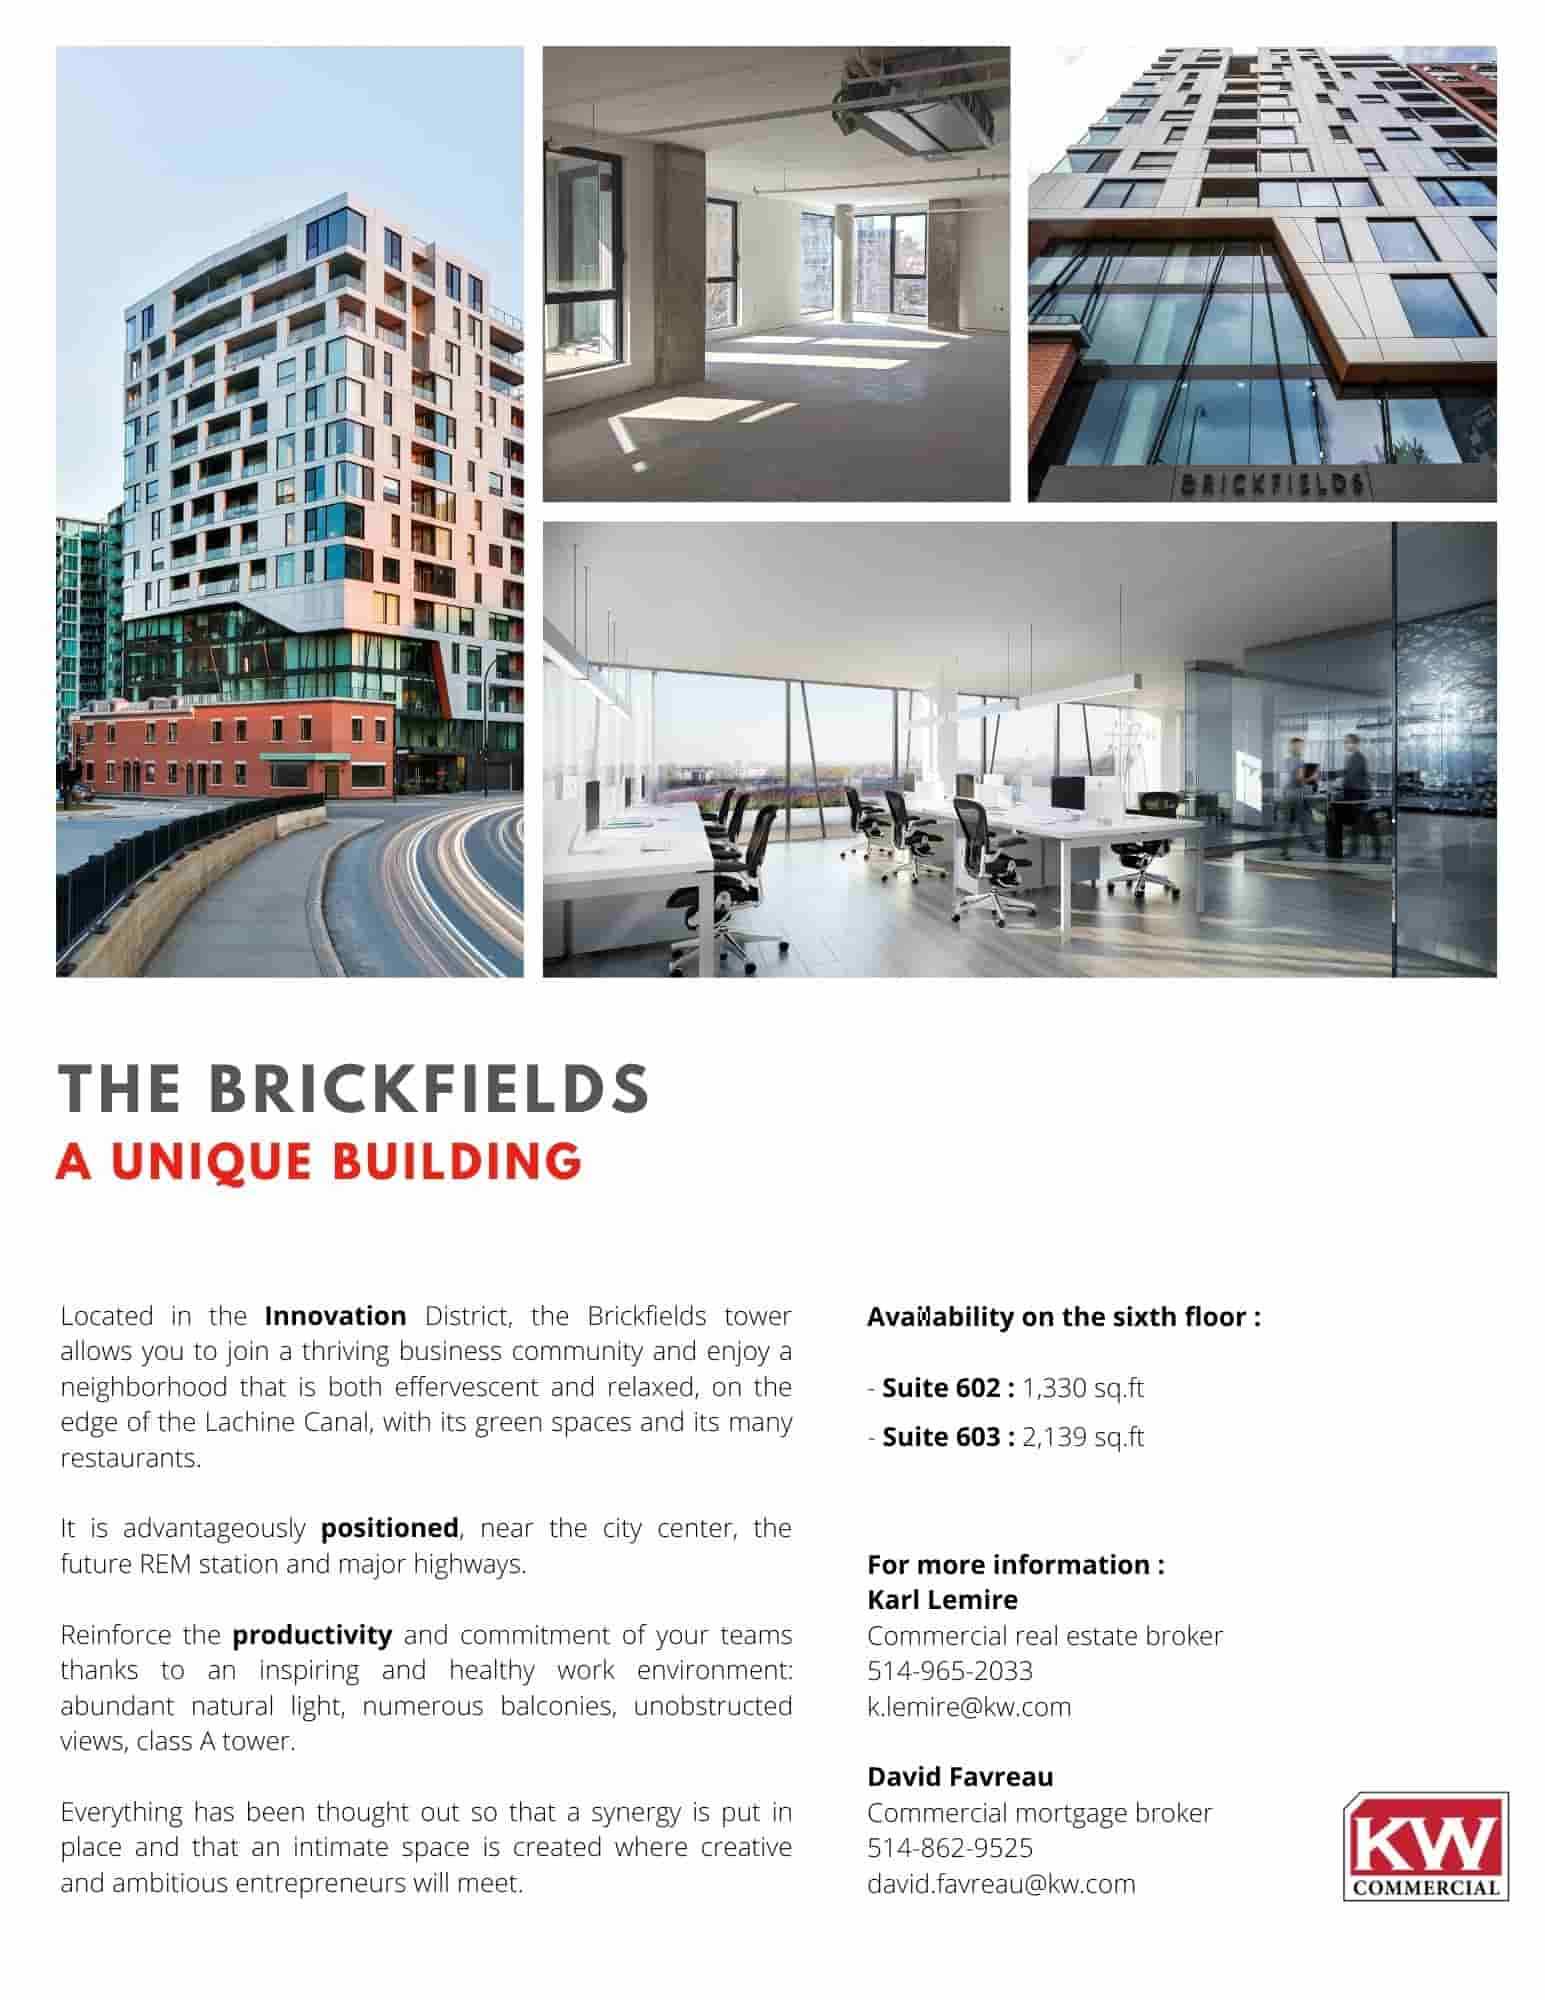 The Brickfields